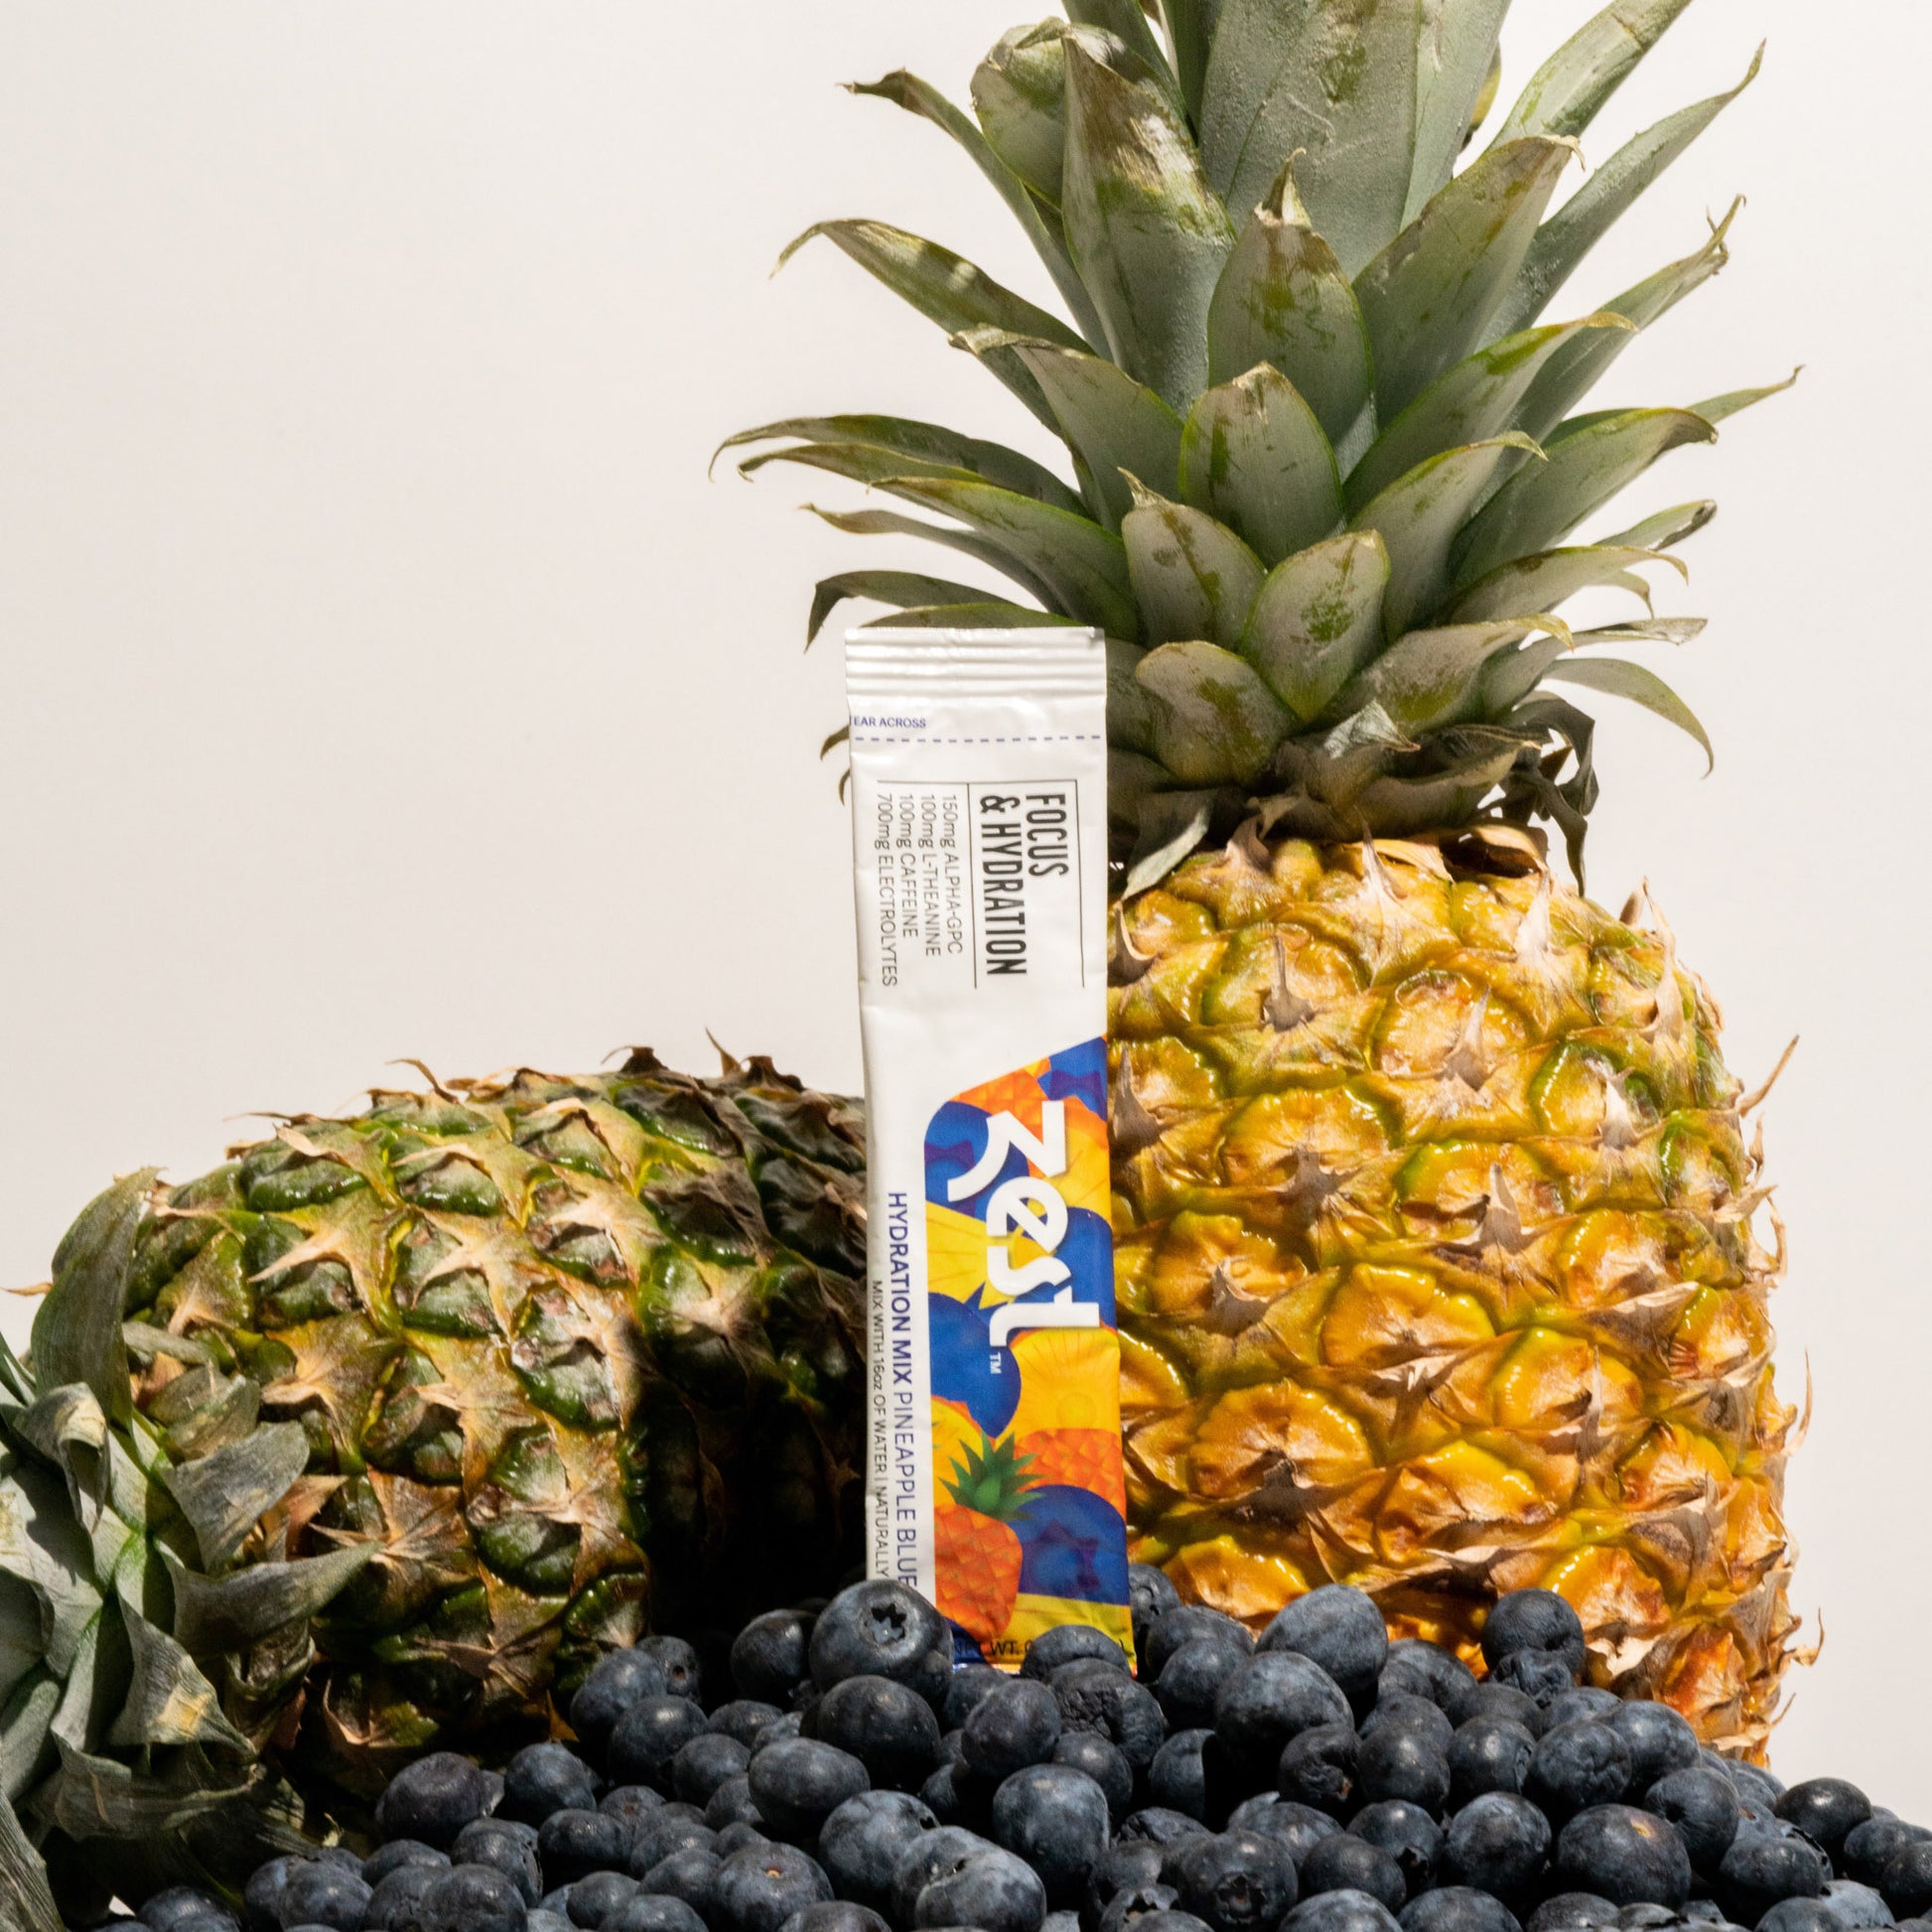 Zest Pineapple Blueberry Focus & Hydration - Powder Sticks